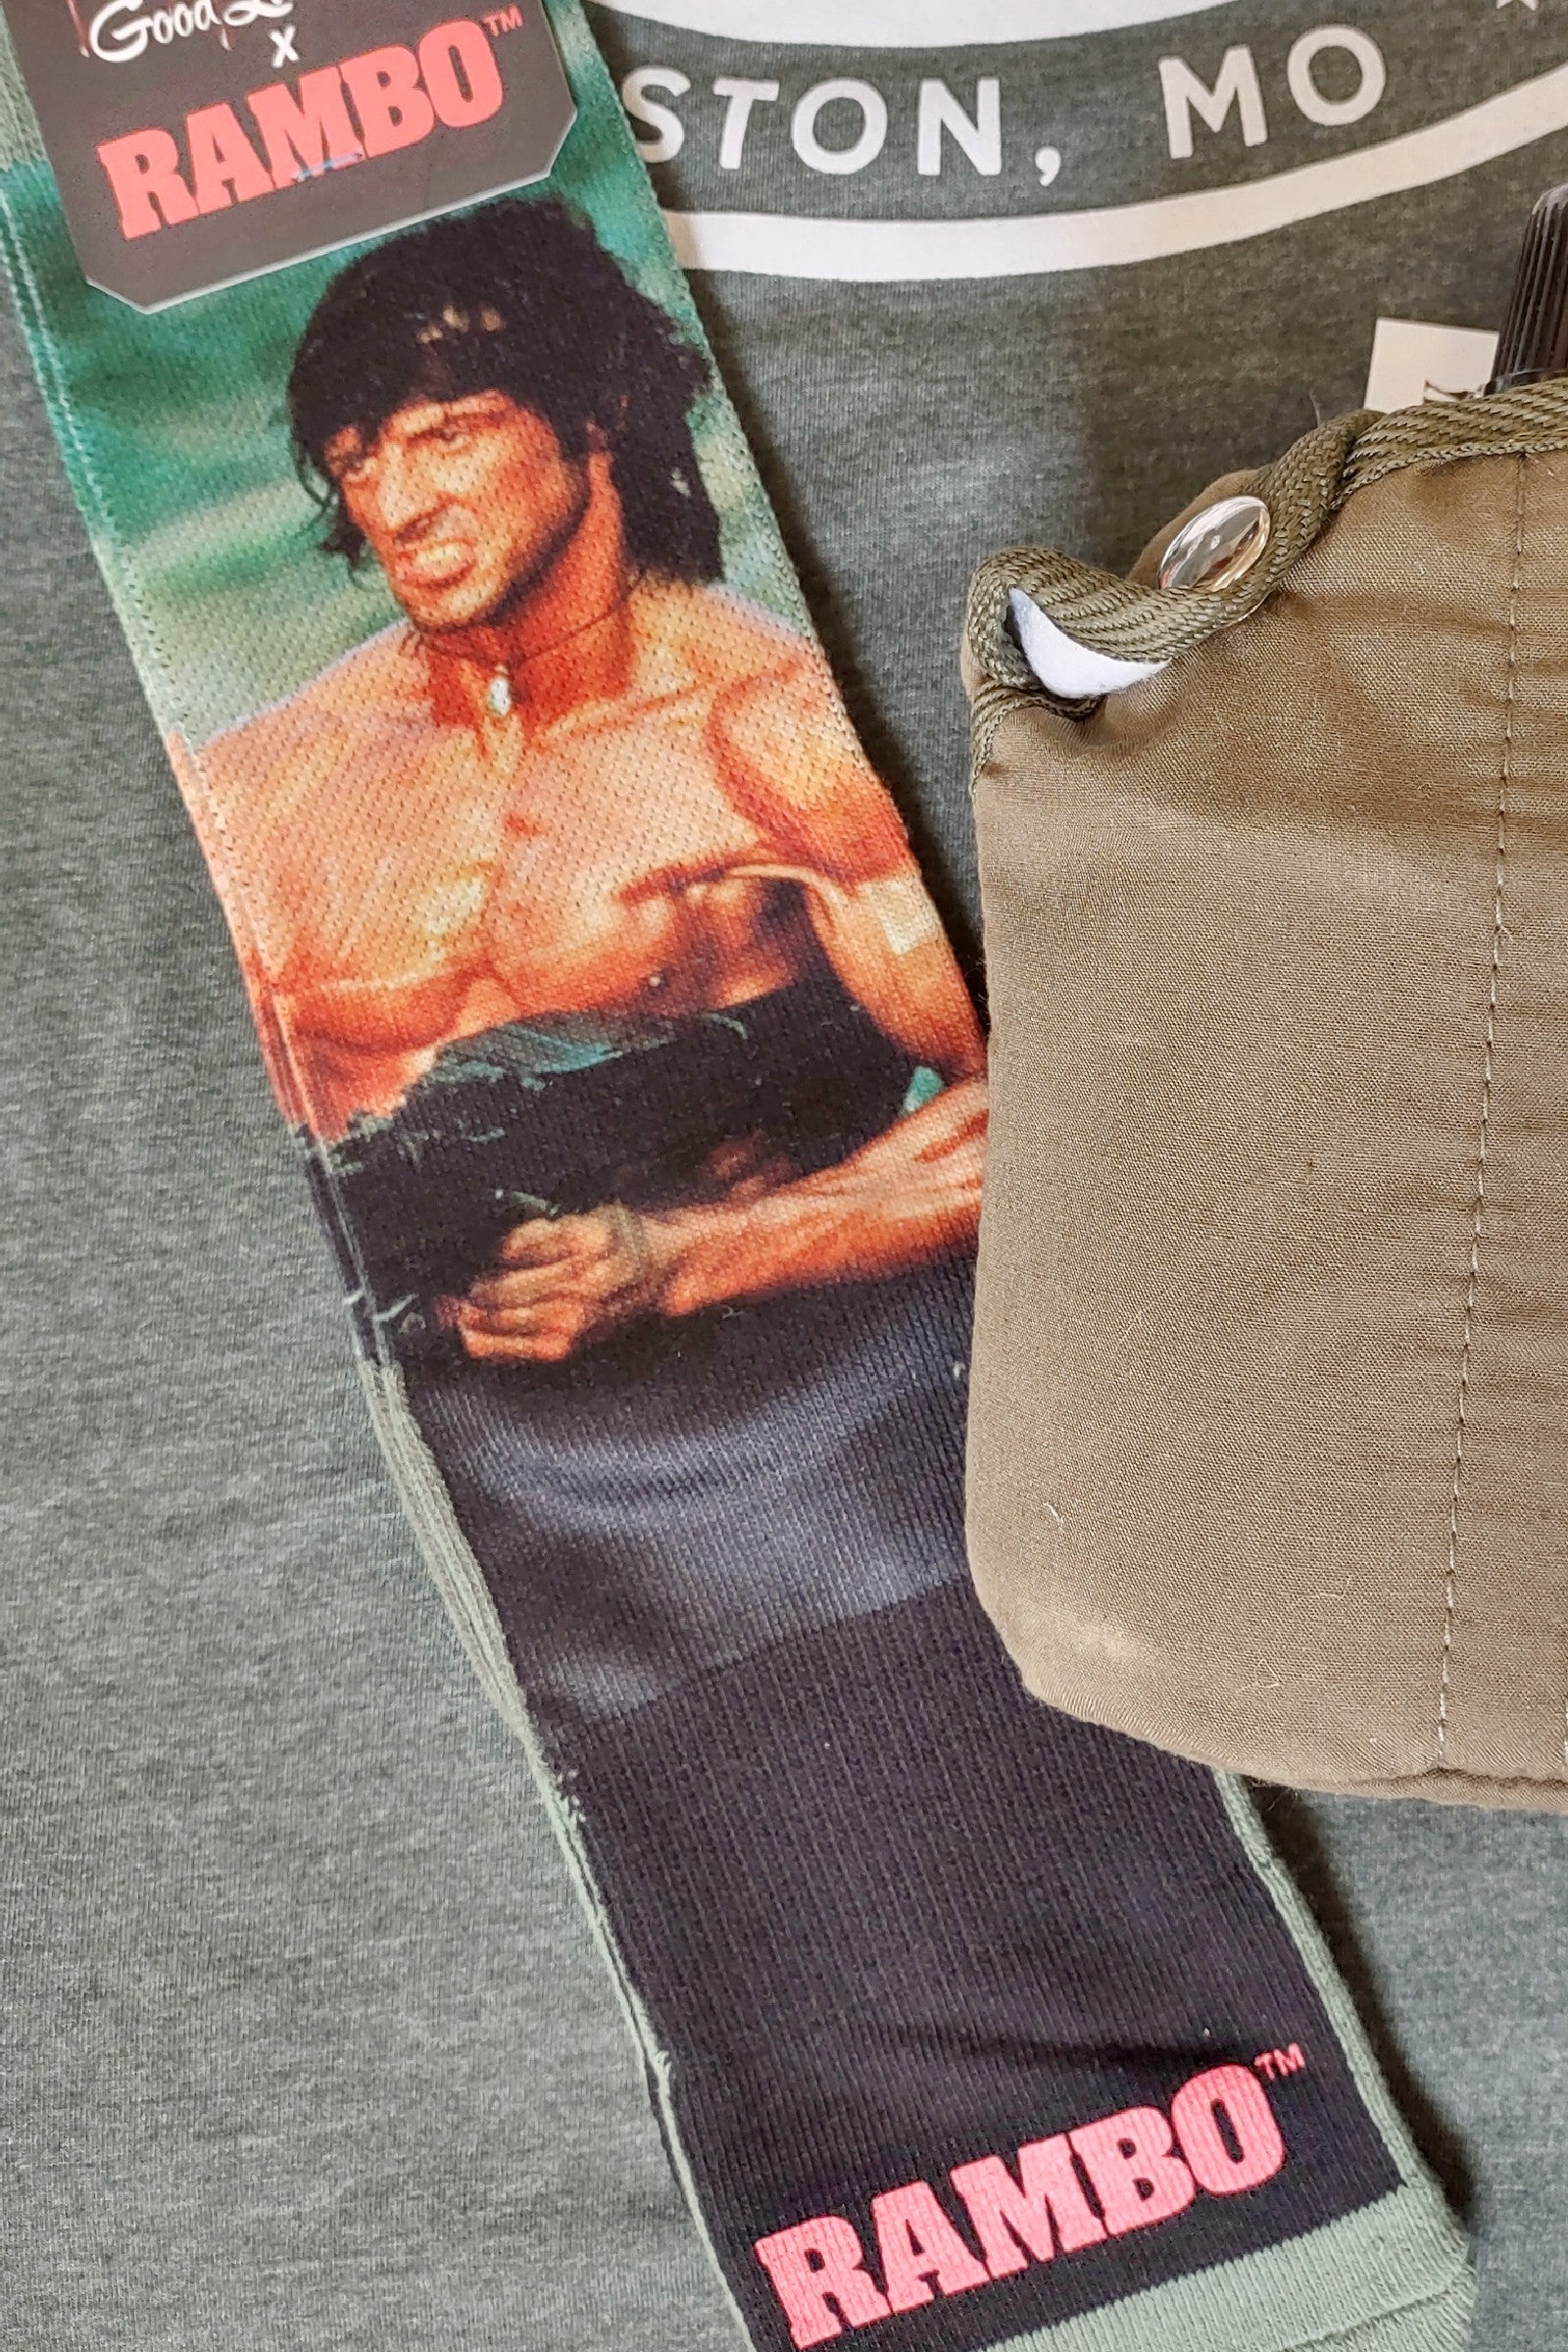 Rambo Men's Crew Socks